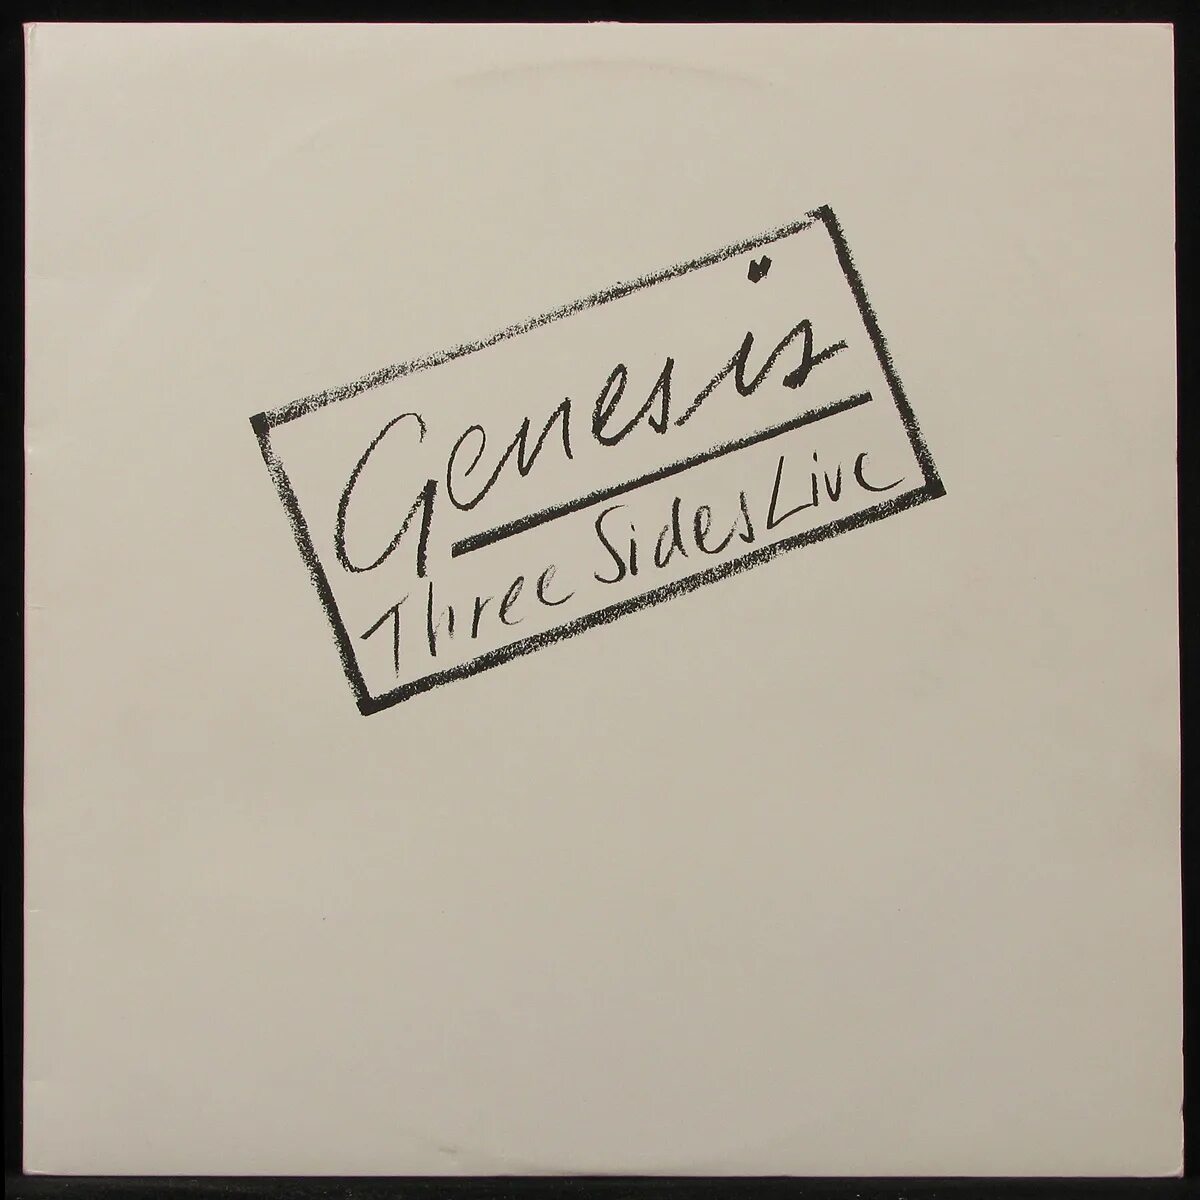 Genesis three Sides Live 1982. Charisma пластинка. Genesis - three Sides Live (1982)DVD. …And then there were three… Genesis. Three sides